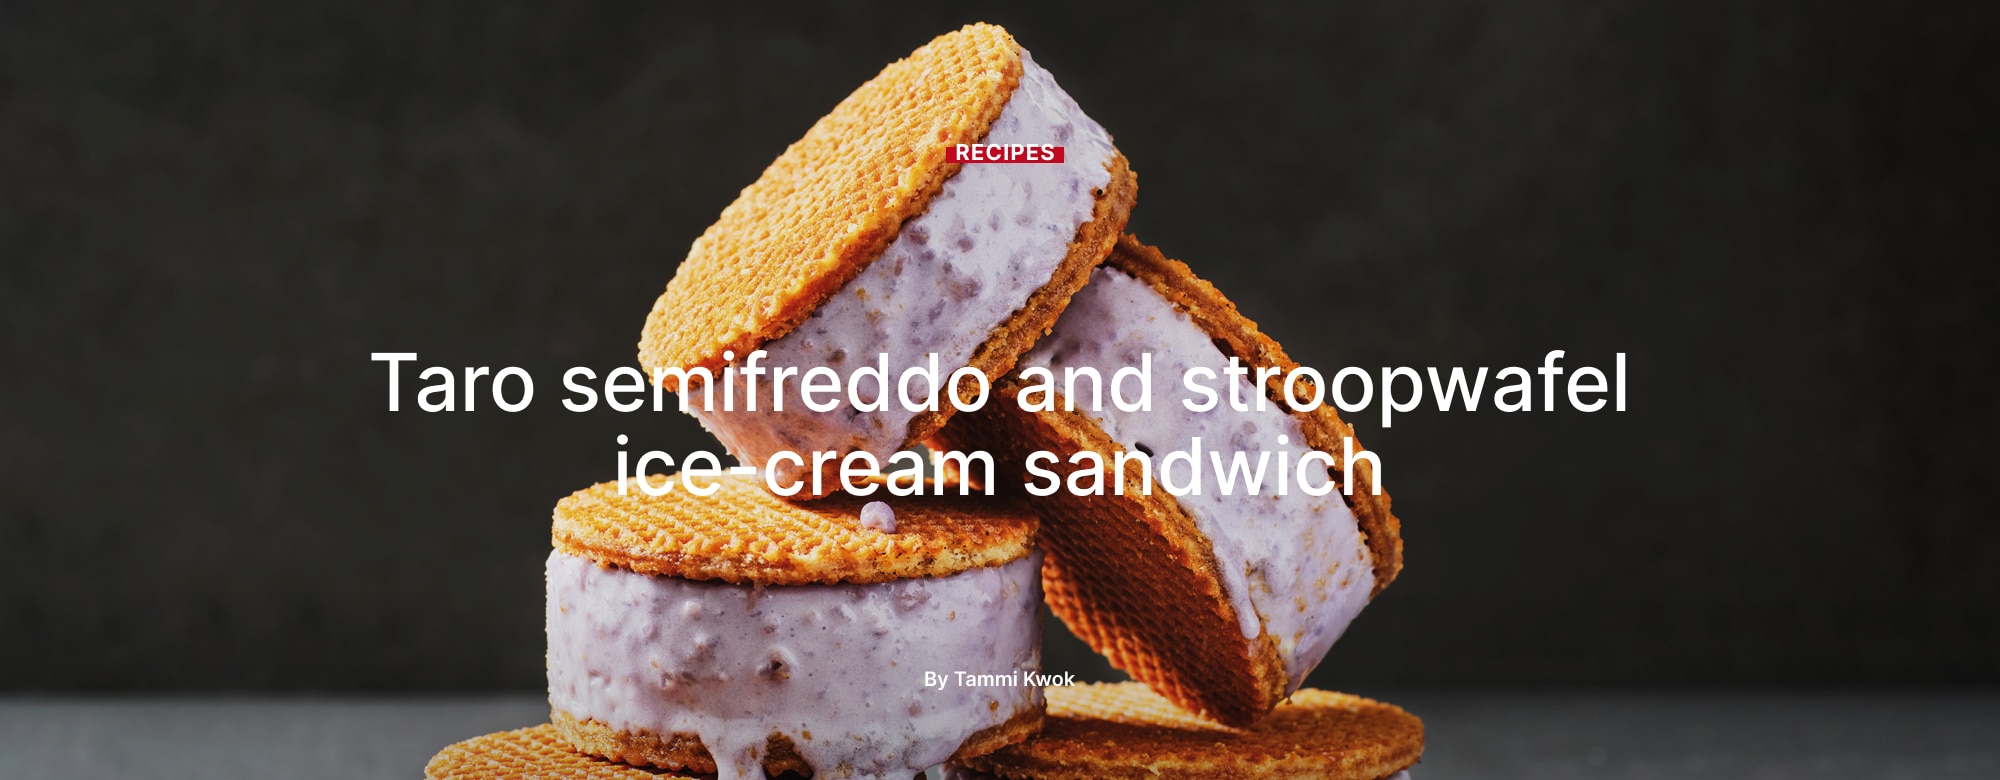 Taro semifreddo and stroopwafel ice-cream sandwich